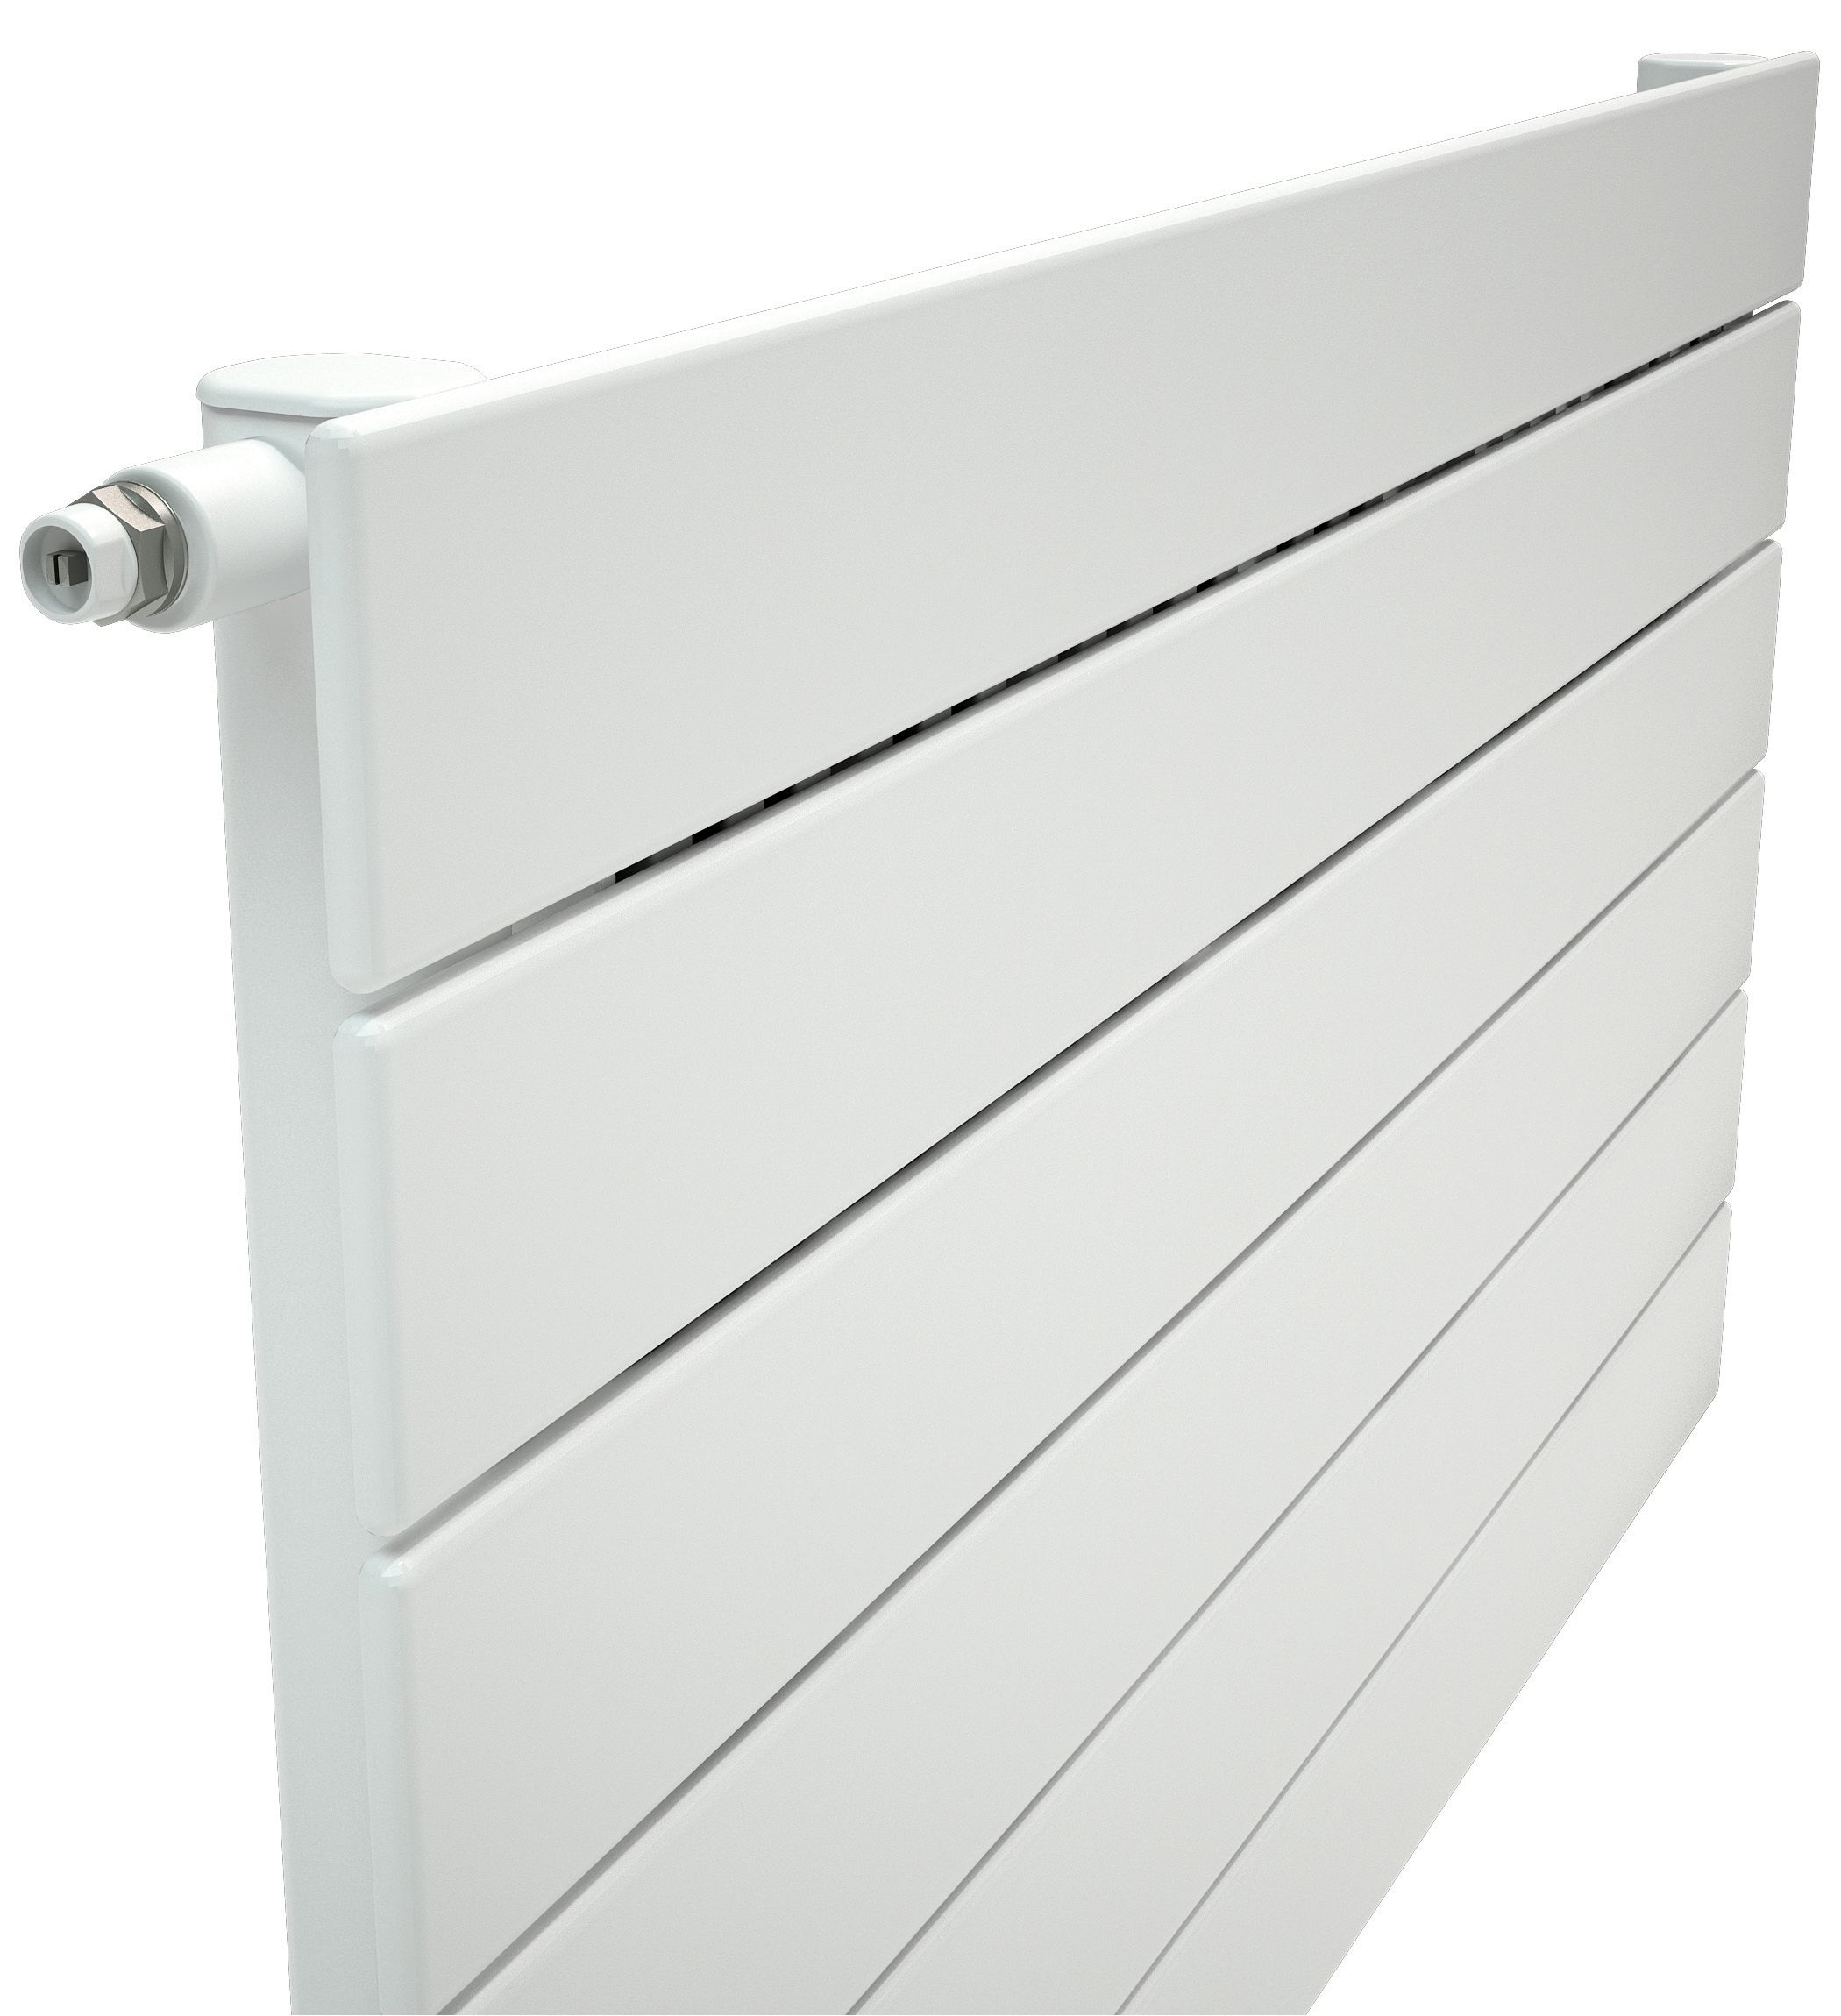 Image of Henrad Verona Single Panel Designer Radiator - White 592 x 2000 mm